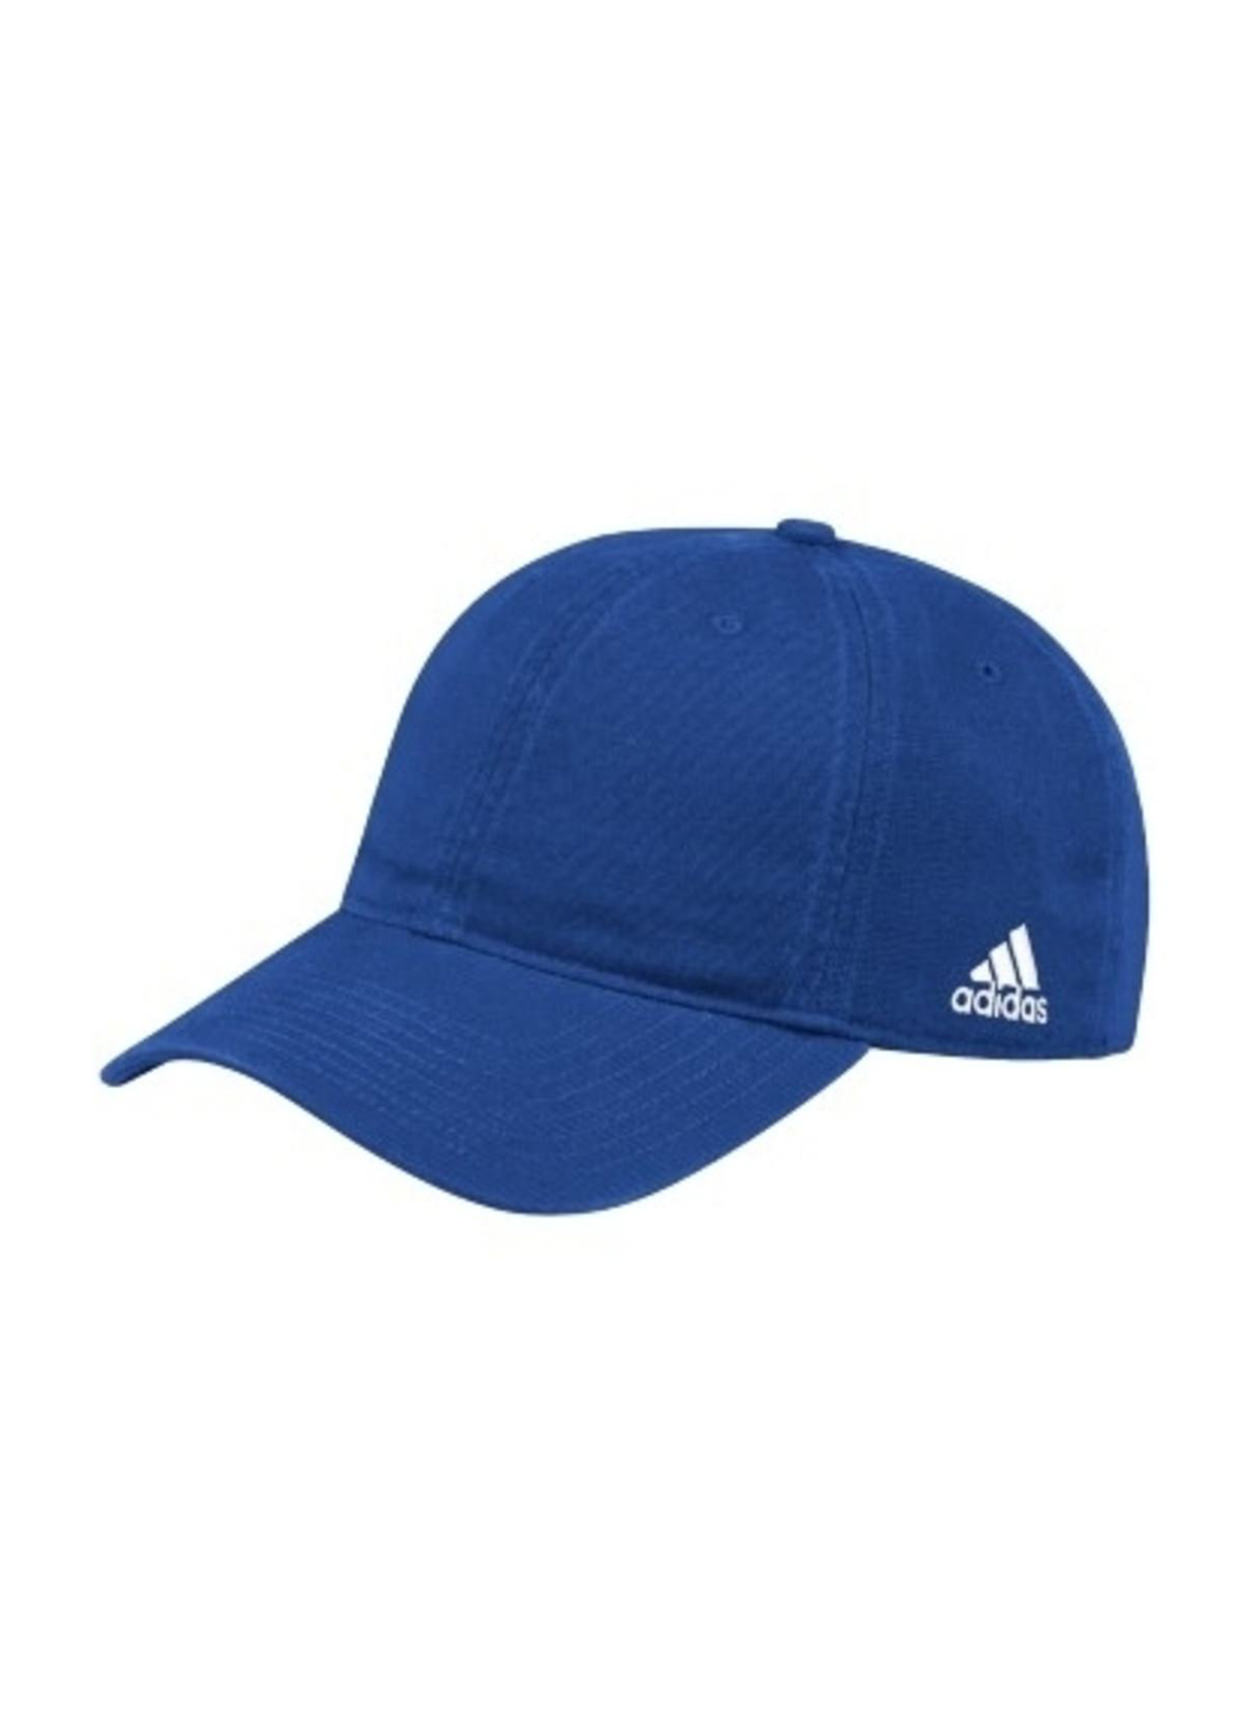 Adidas Adjustable Slouch Hat Royal | Adidas